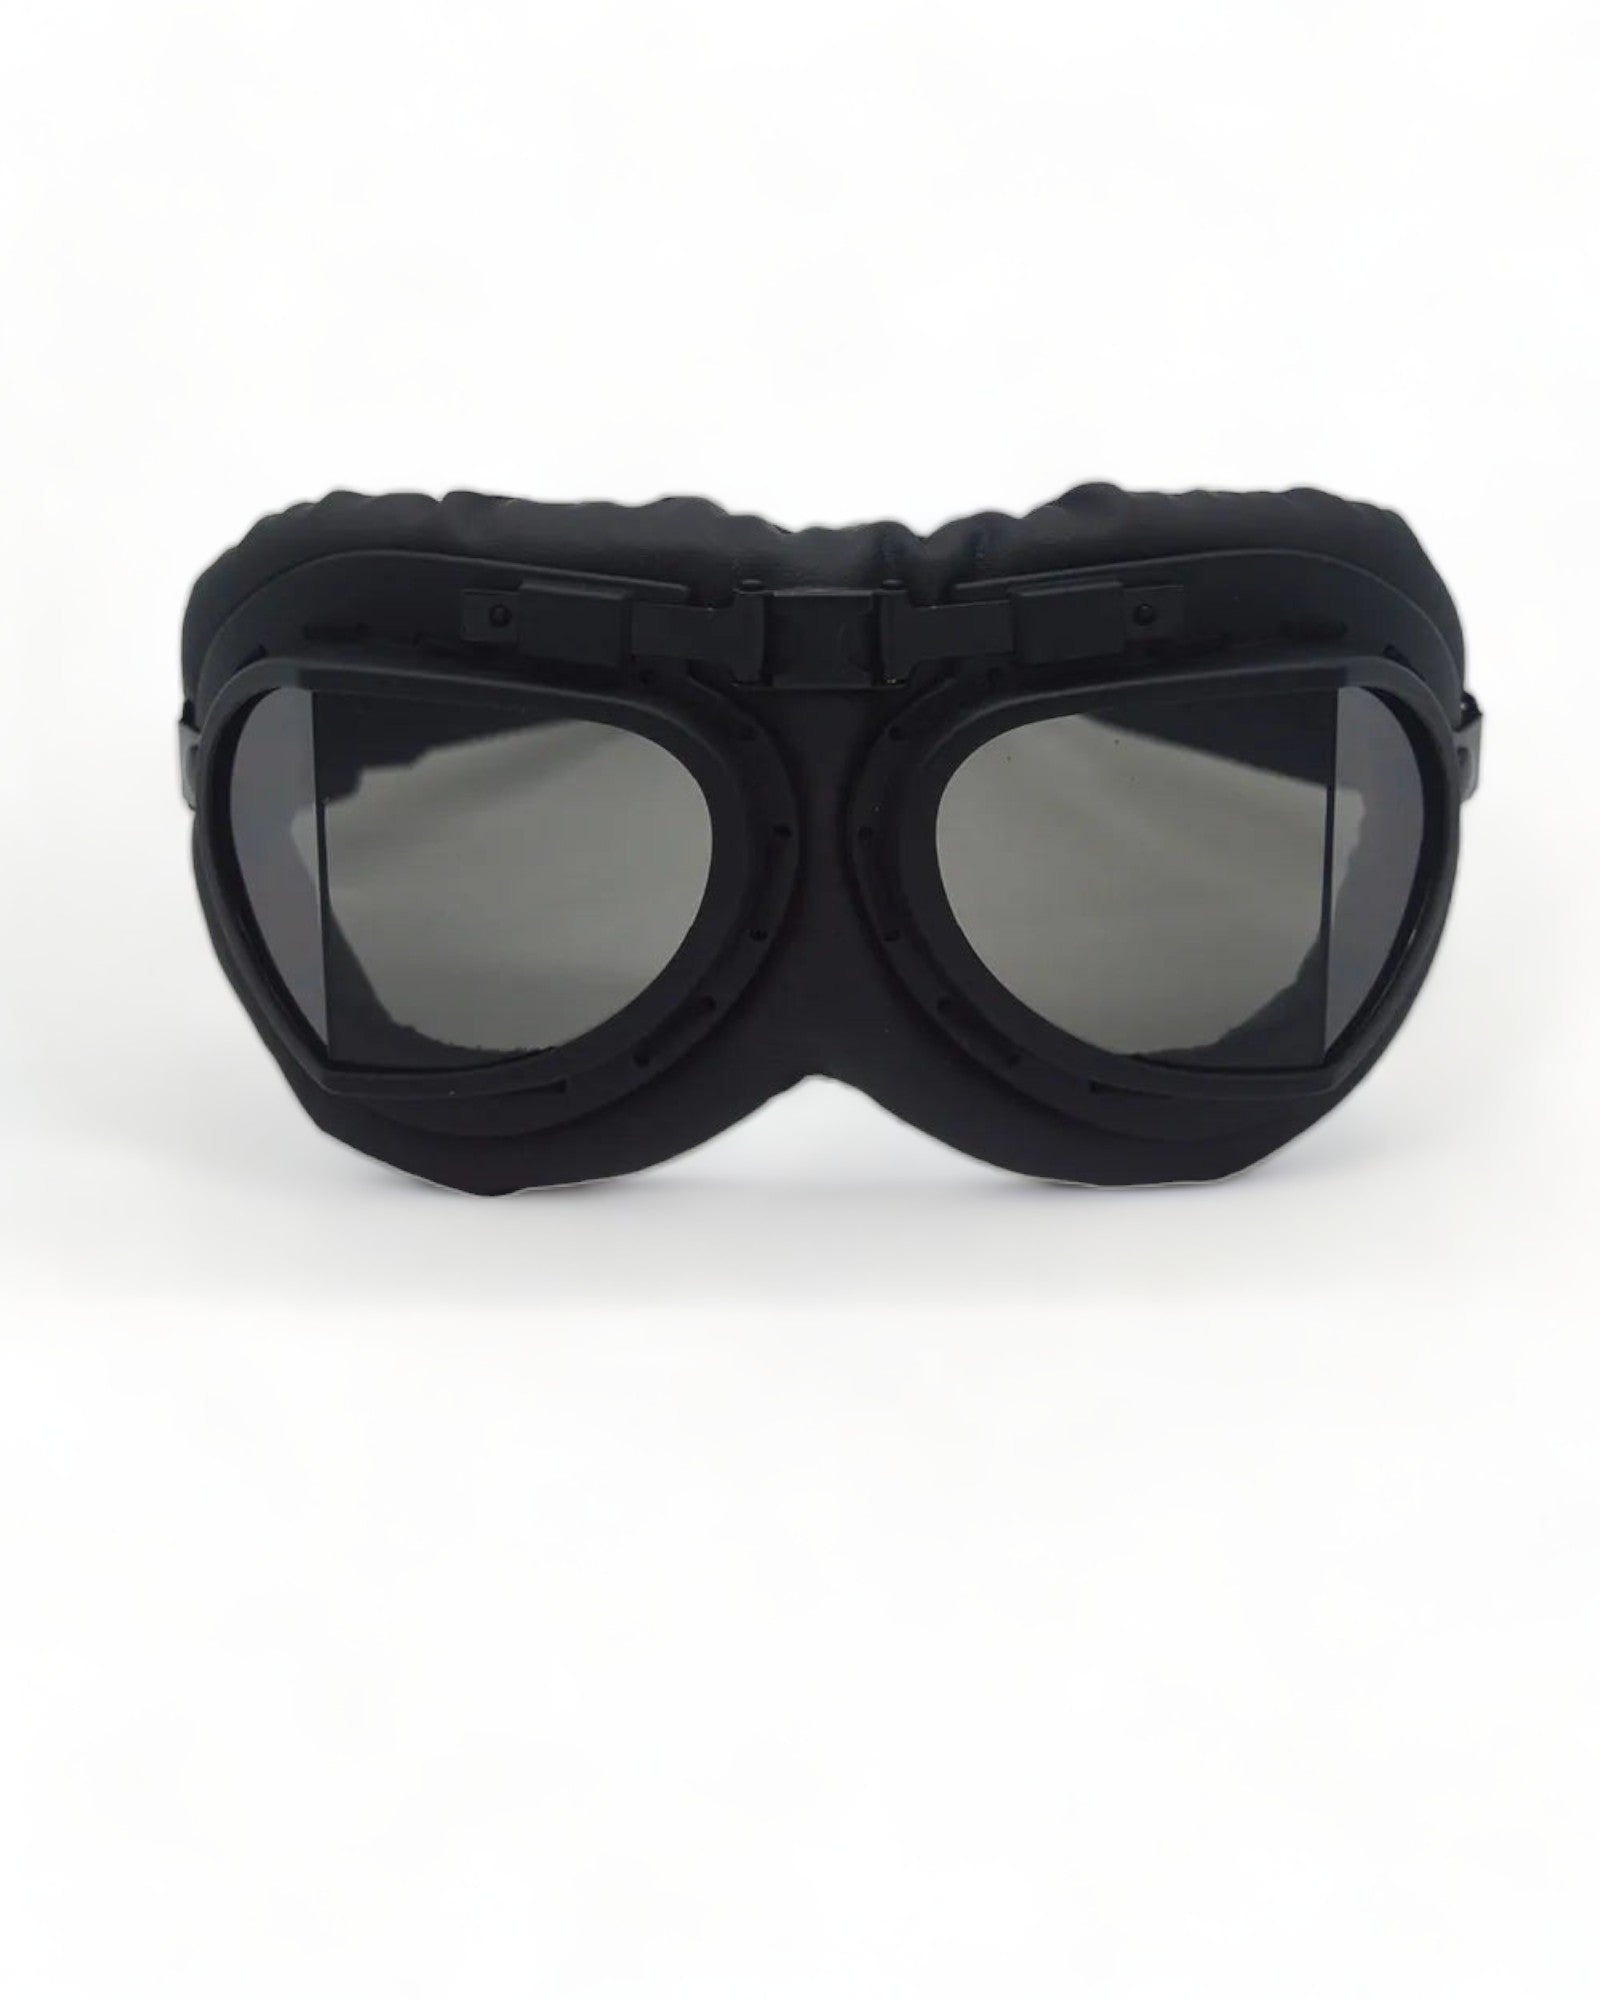 Smoke Sunglasses Eyewear red steampunk cyberpunk Vintage Goggles Desert